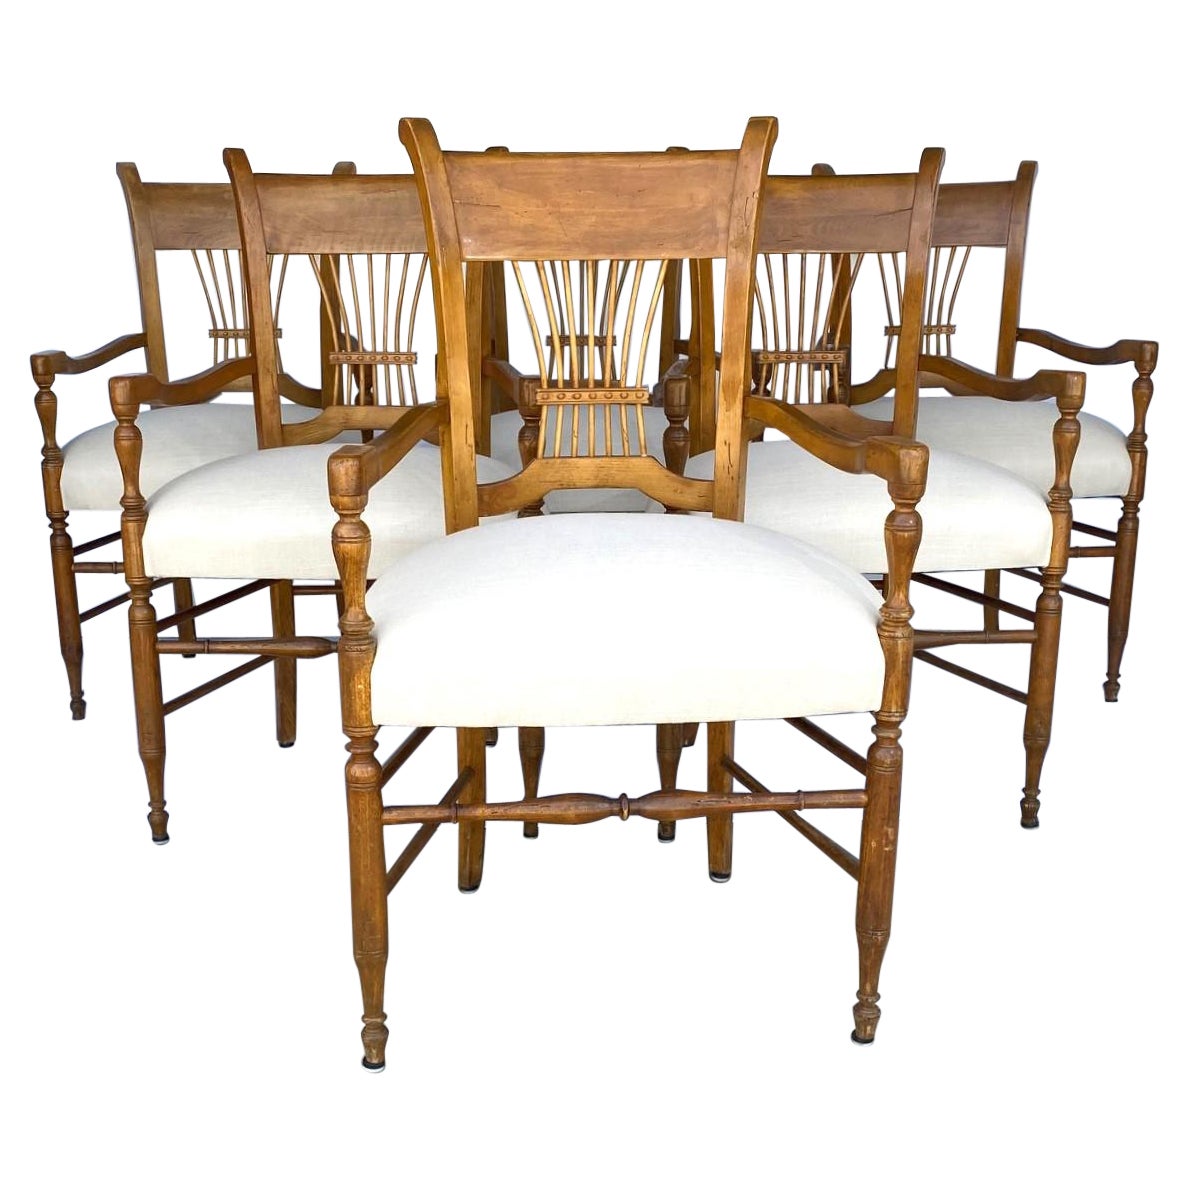 Italian Dining Chairs Set of 6